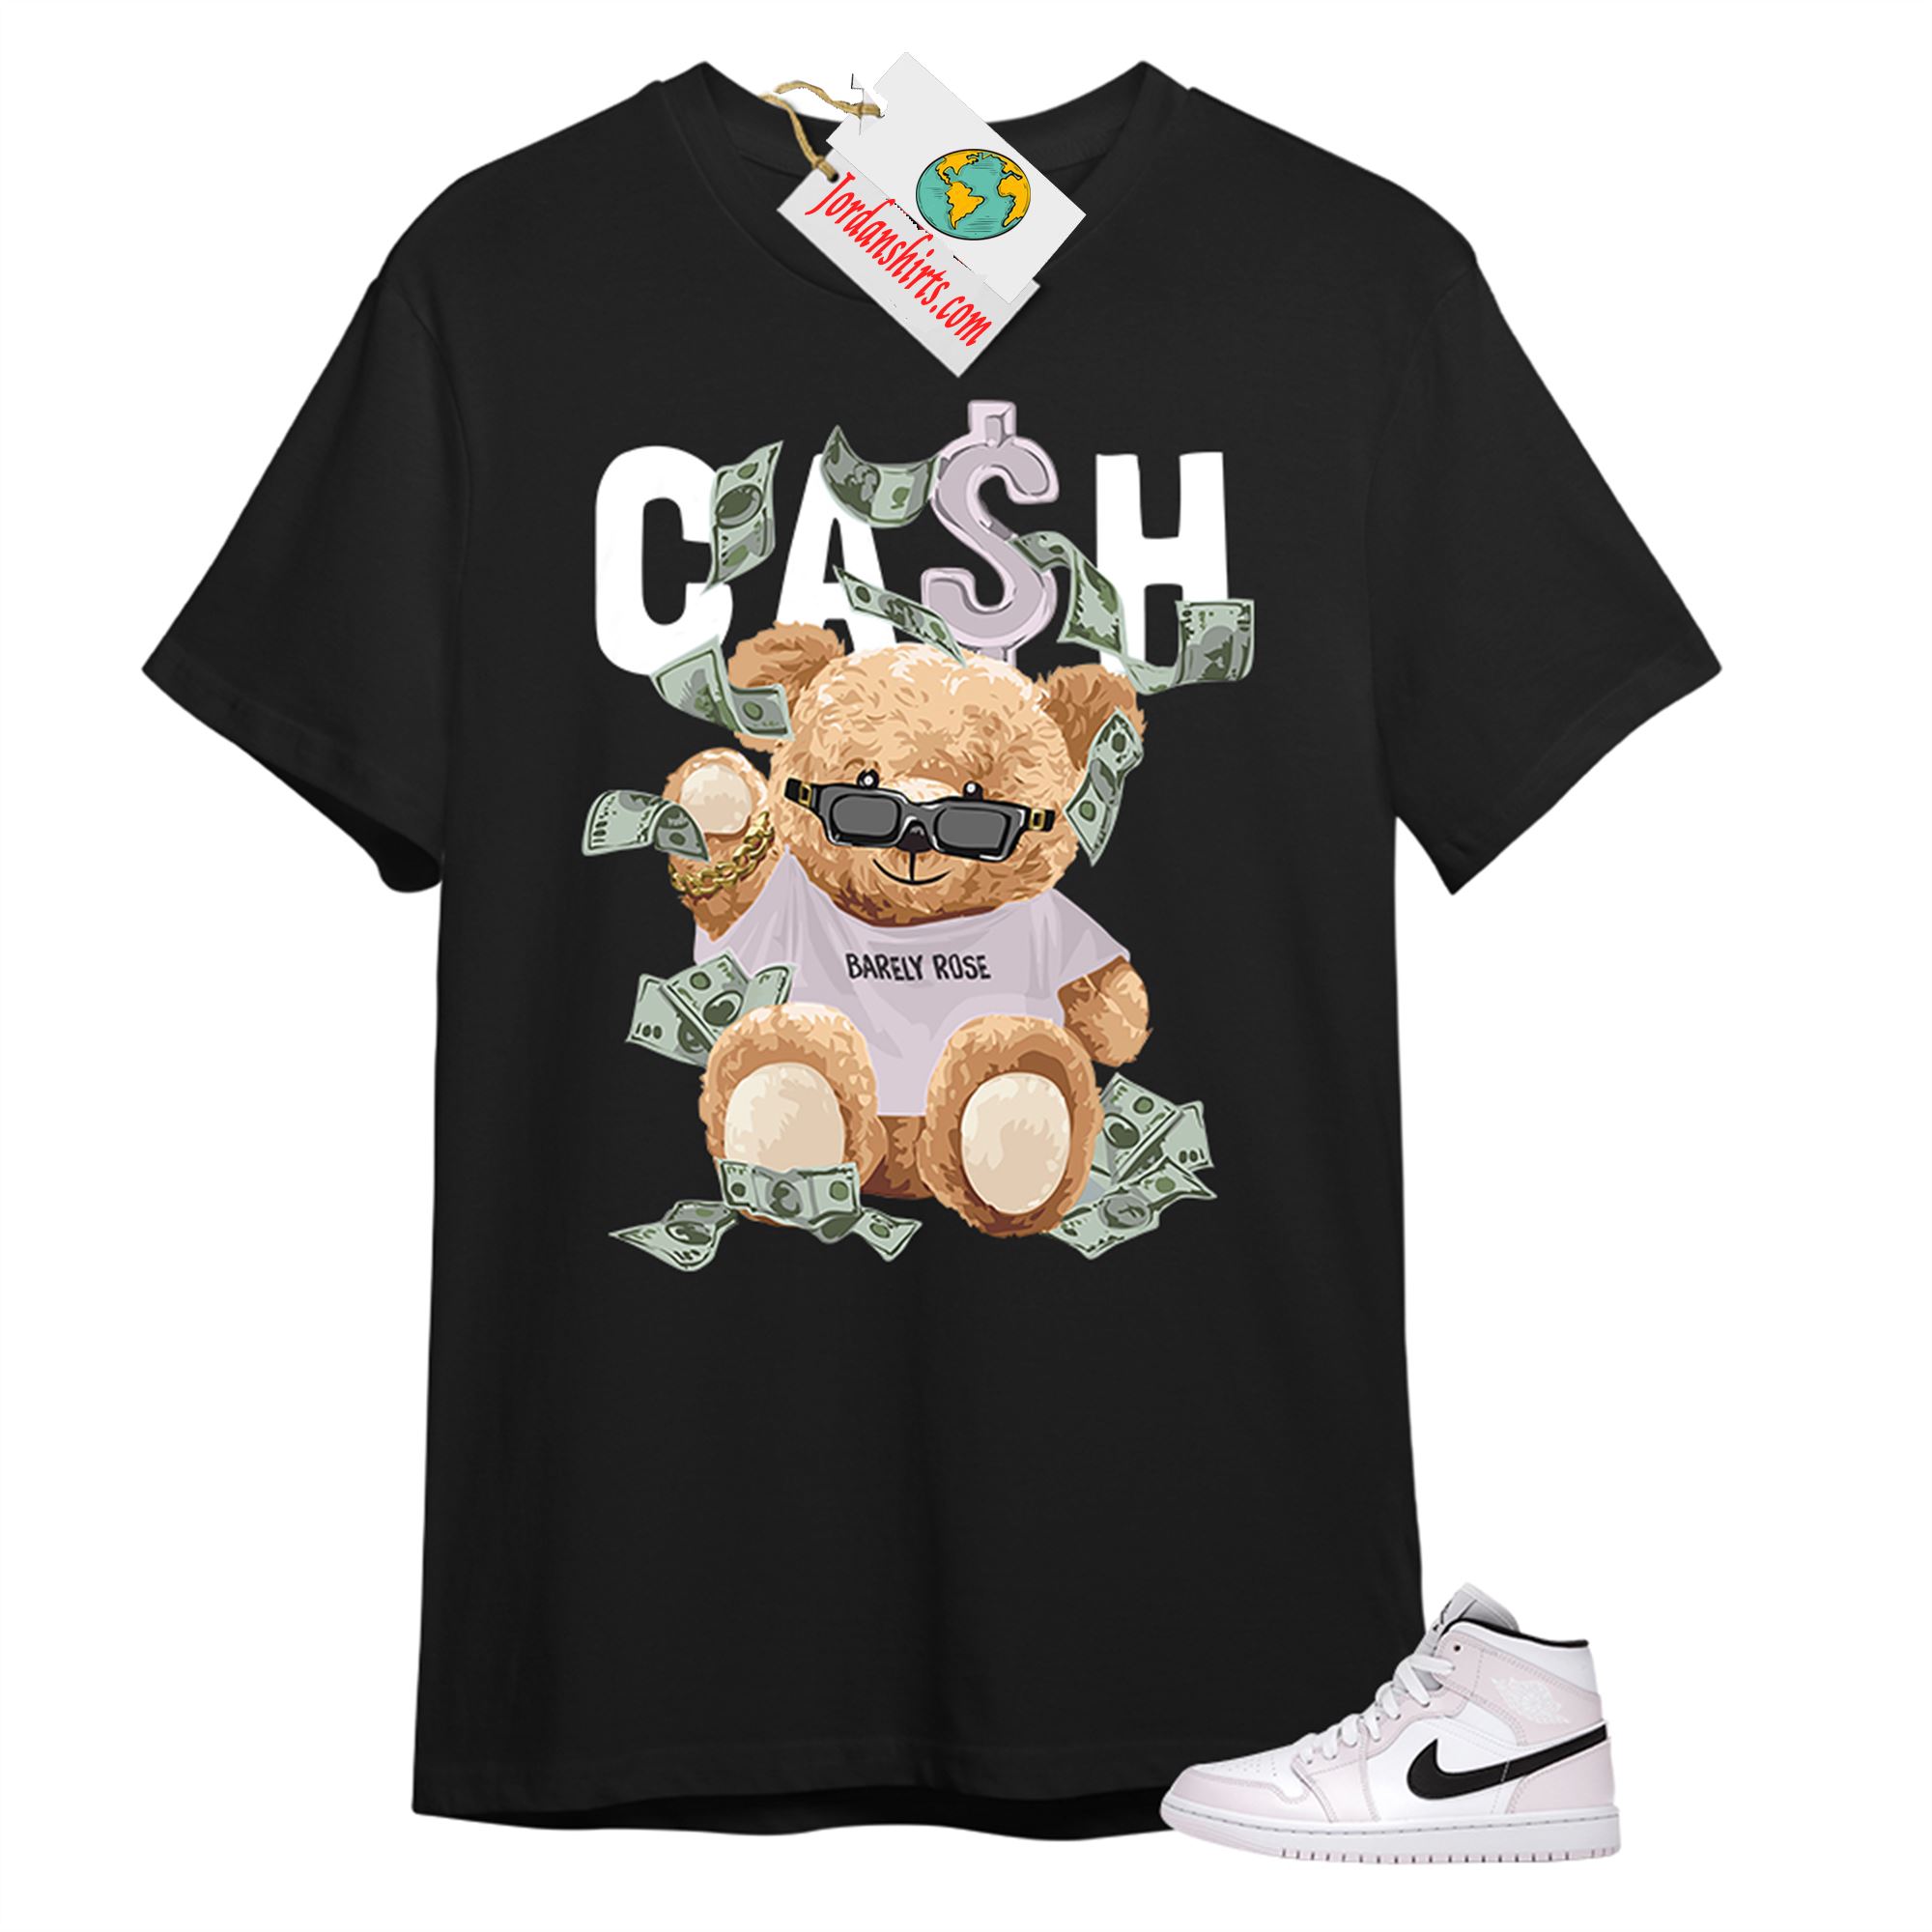 Jordan 1 Shirt, Cash Teddy Bear In Sunglasses Black T-shirt Air Jordan 1 Barely Rose 1s Size Up To 5xl